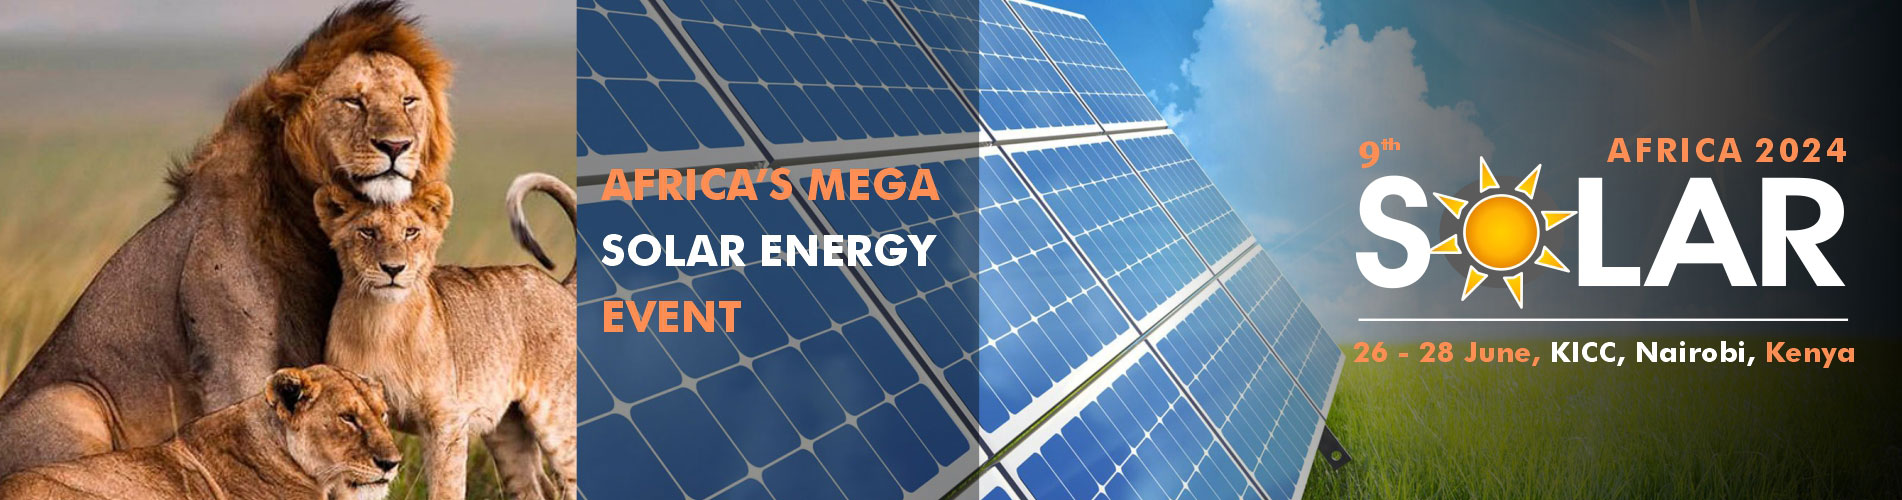 Solar Kenya 2024 - International Solar Energy Show Africa